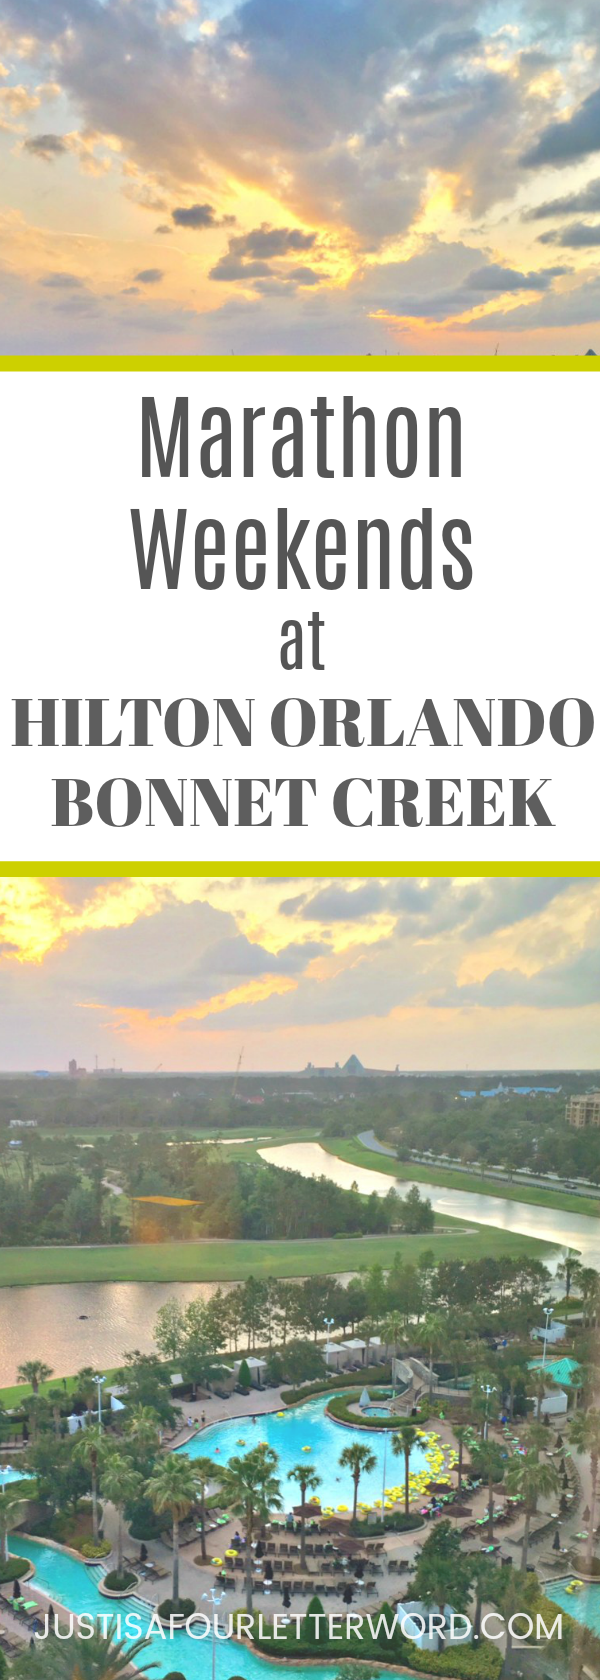 Hilton Orlando Bonnet Creek Marathon Weekends